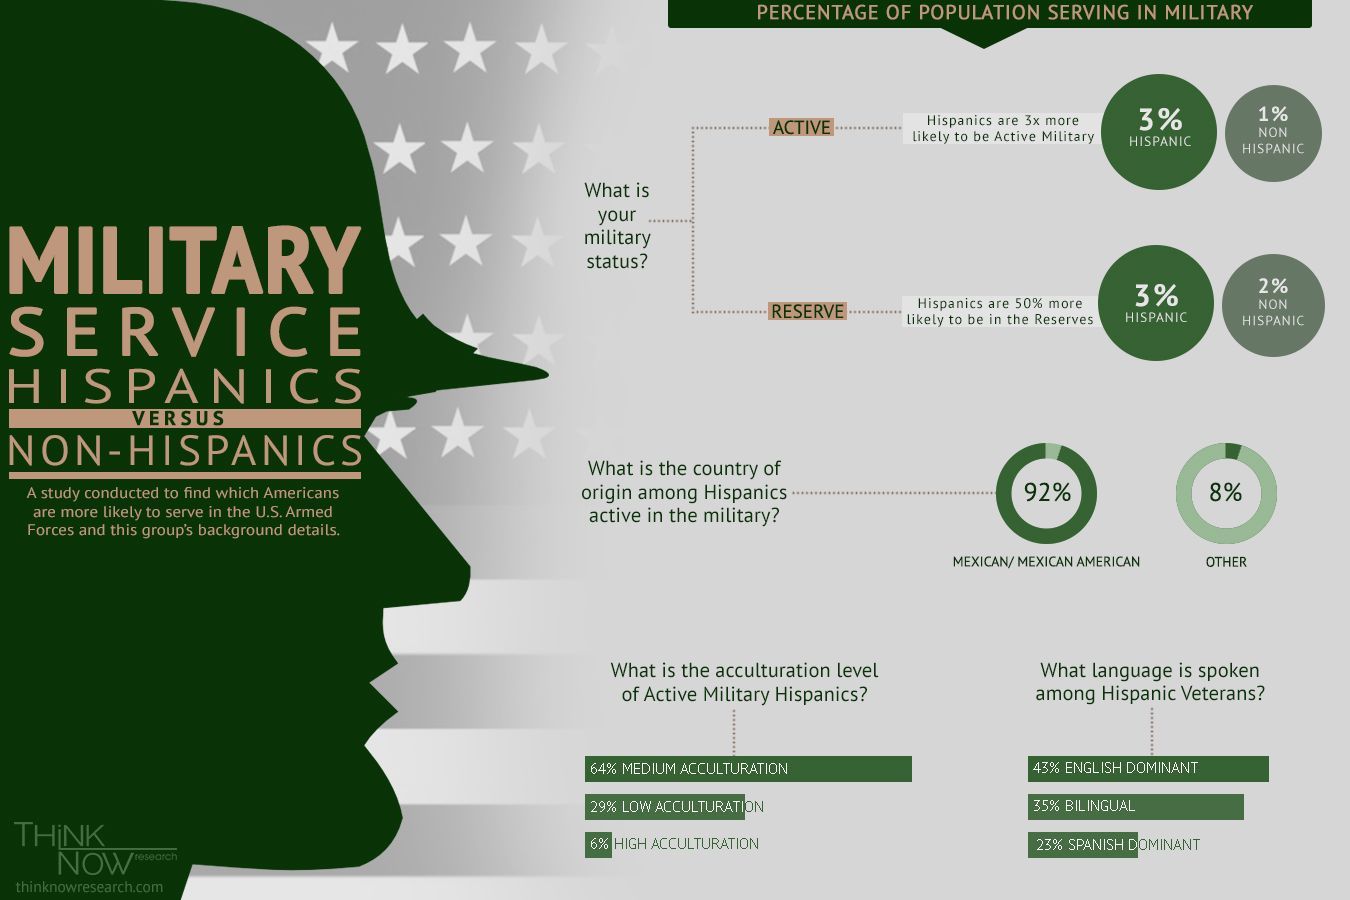 hispanics-military-service-infographic